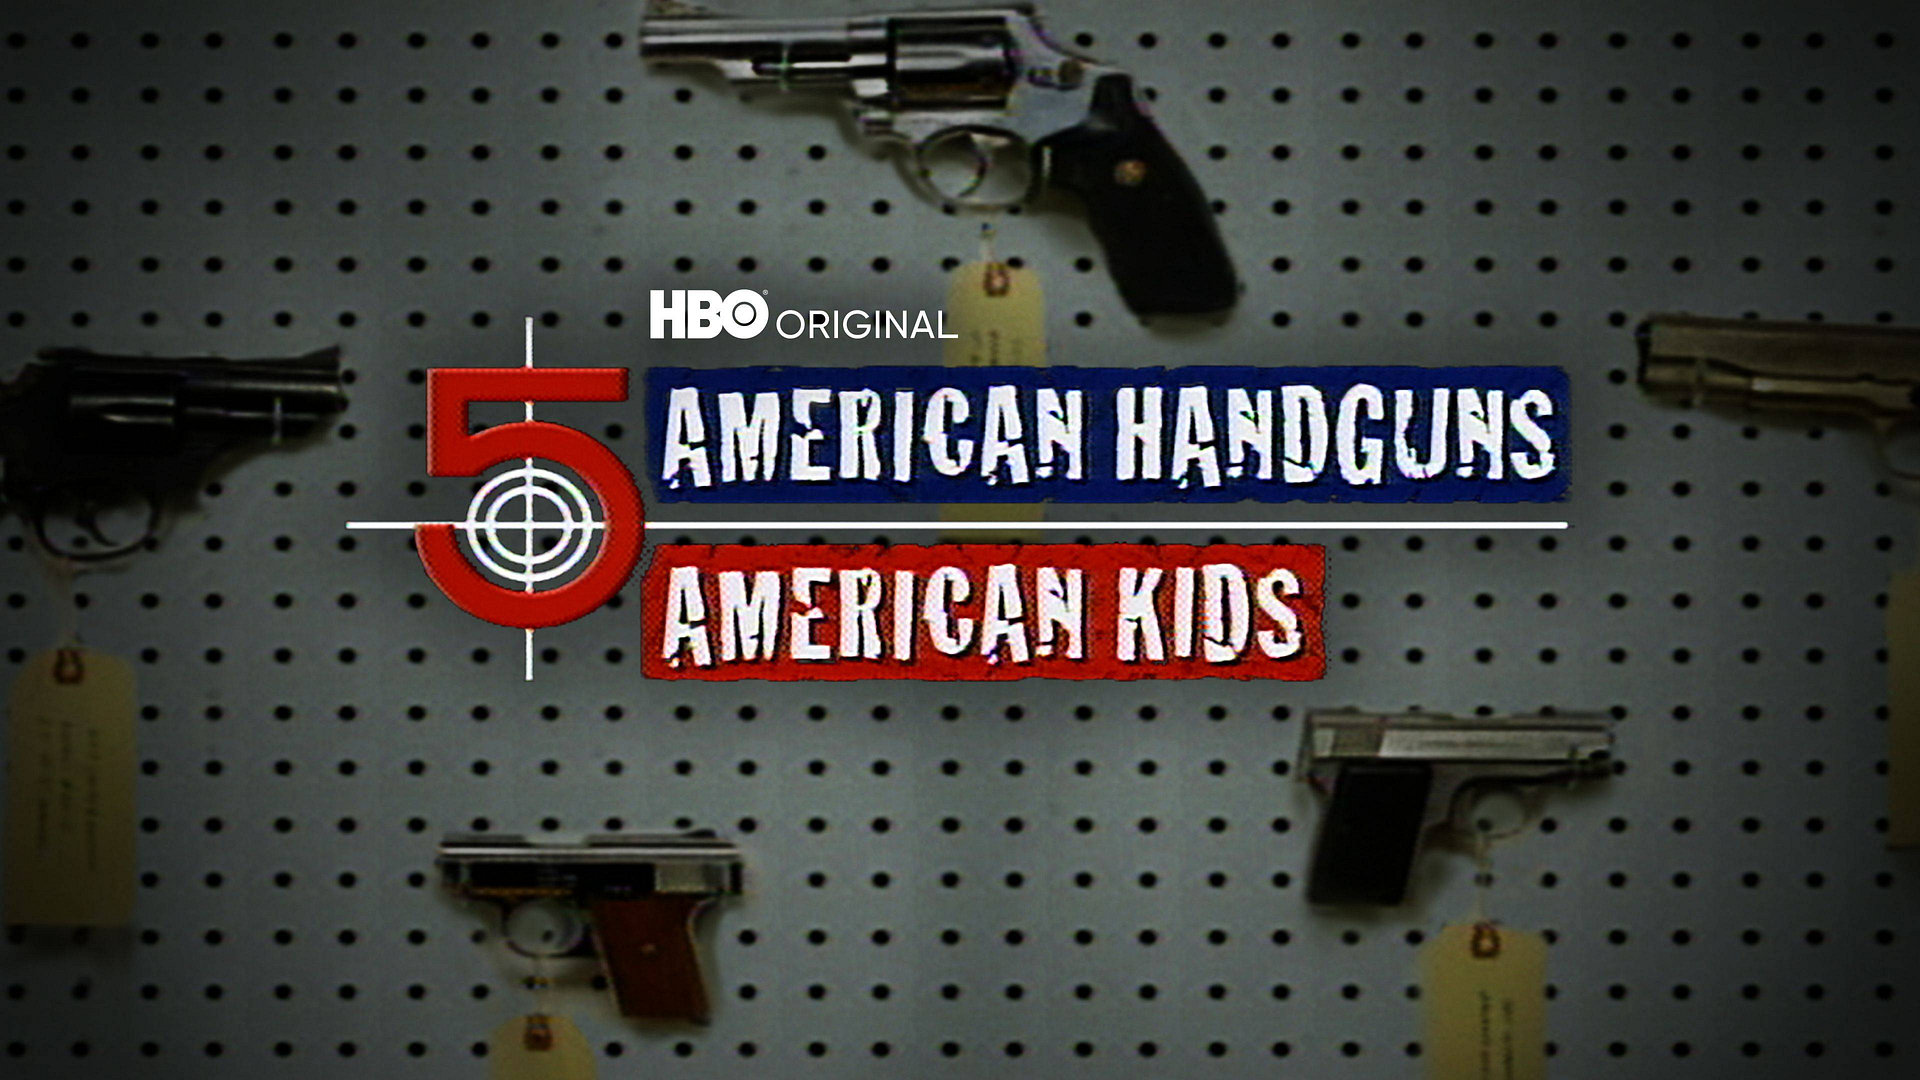 5 American Handguns - 5 American Kids: America Undercover